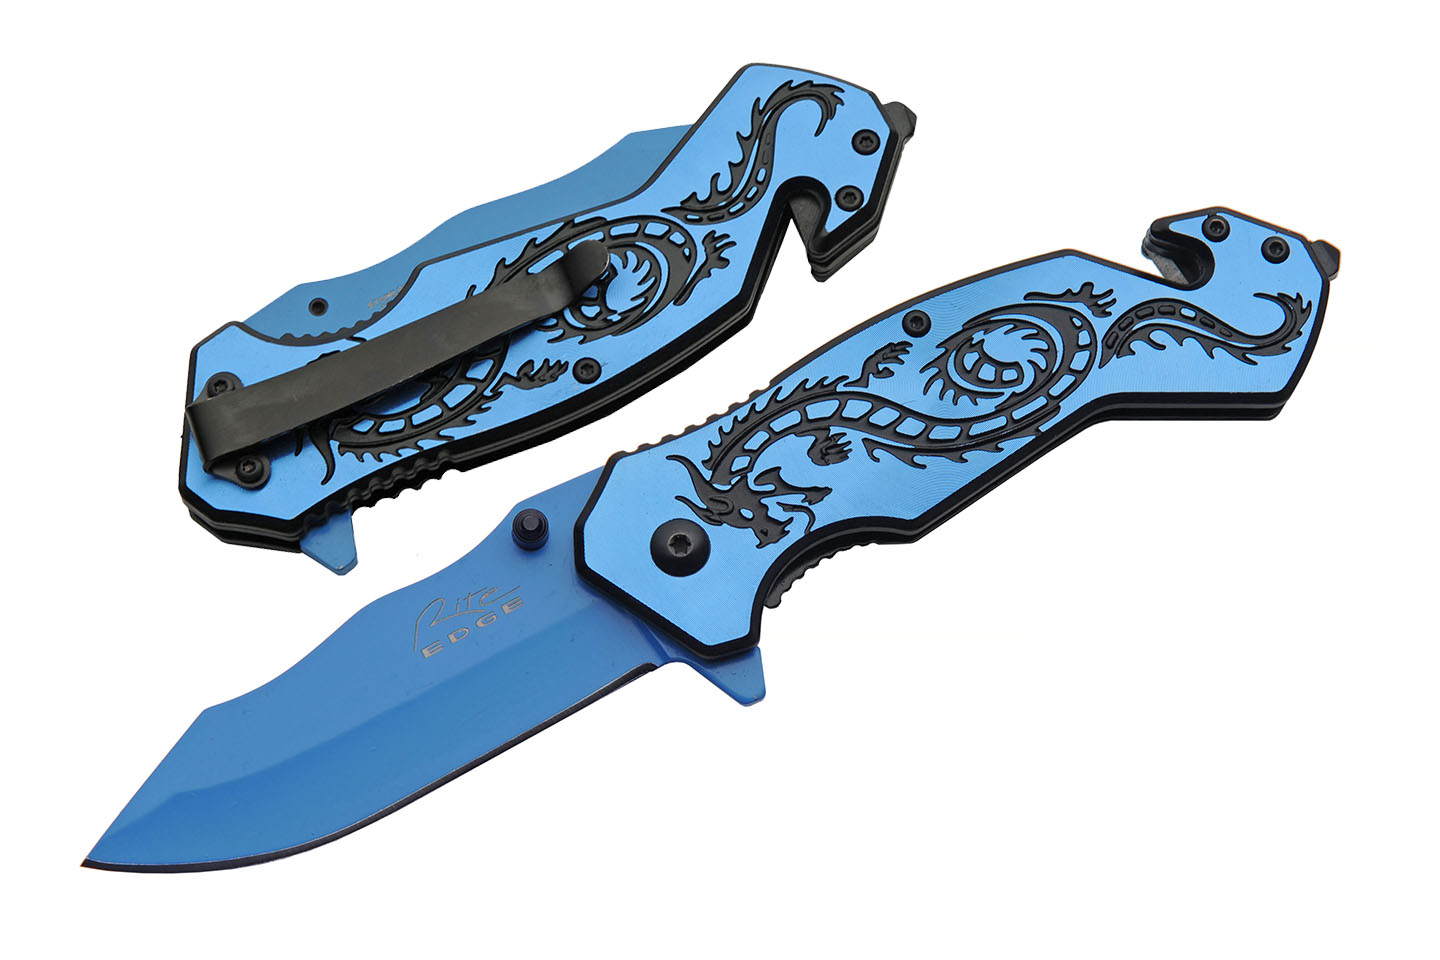 Spring-Assist Folding Knife | Rite Edge Blue/Black Dragon Steel Blade Rescue EDC